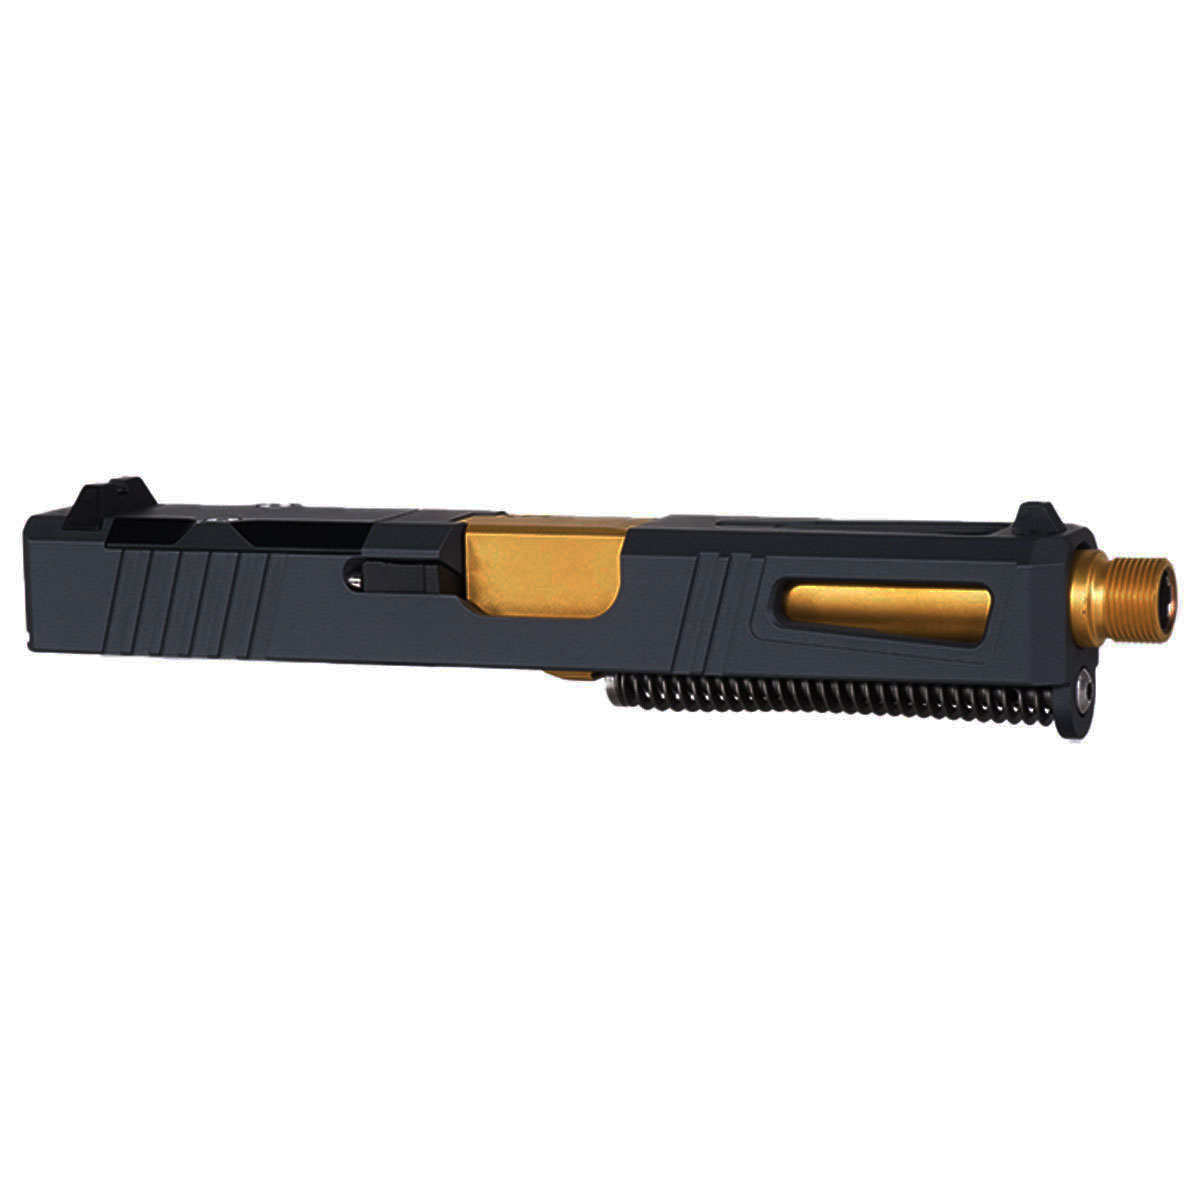 MMC 'Hermes' 9mm Complete Slide Kit - Glock 19 Gen 1-3 Compatible